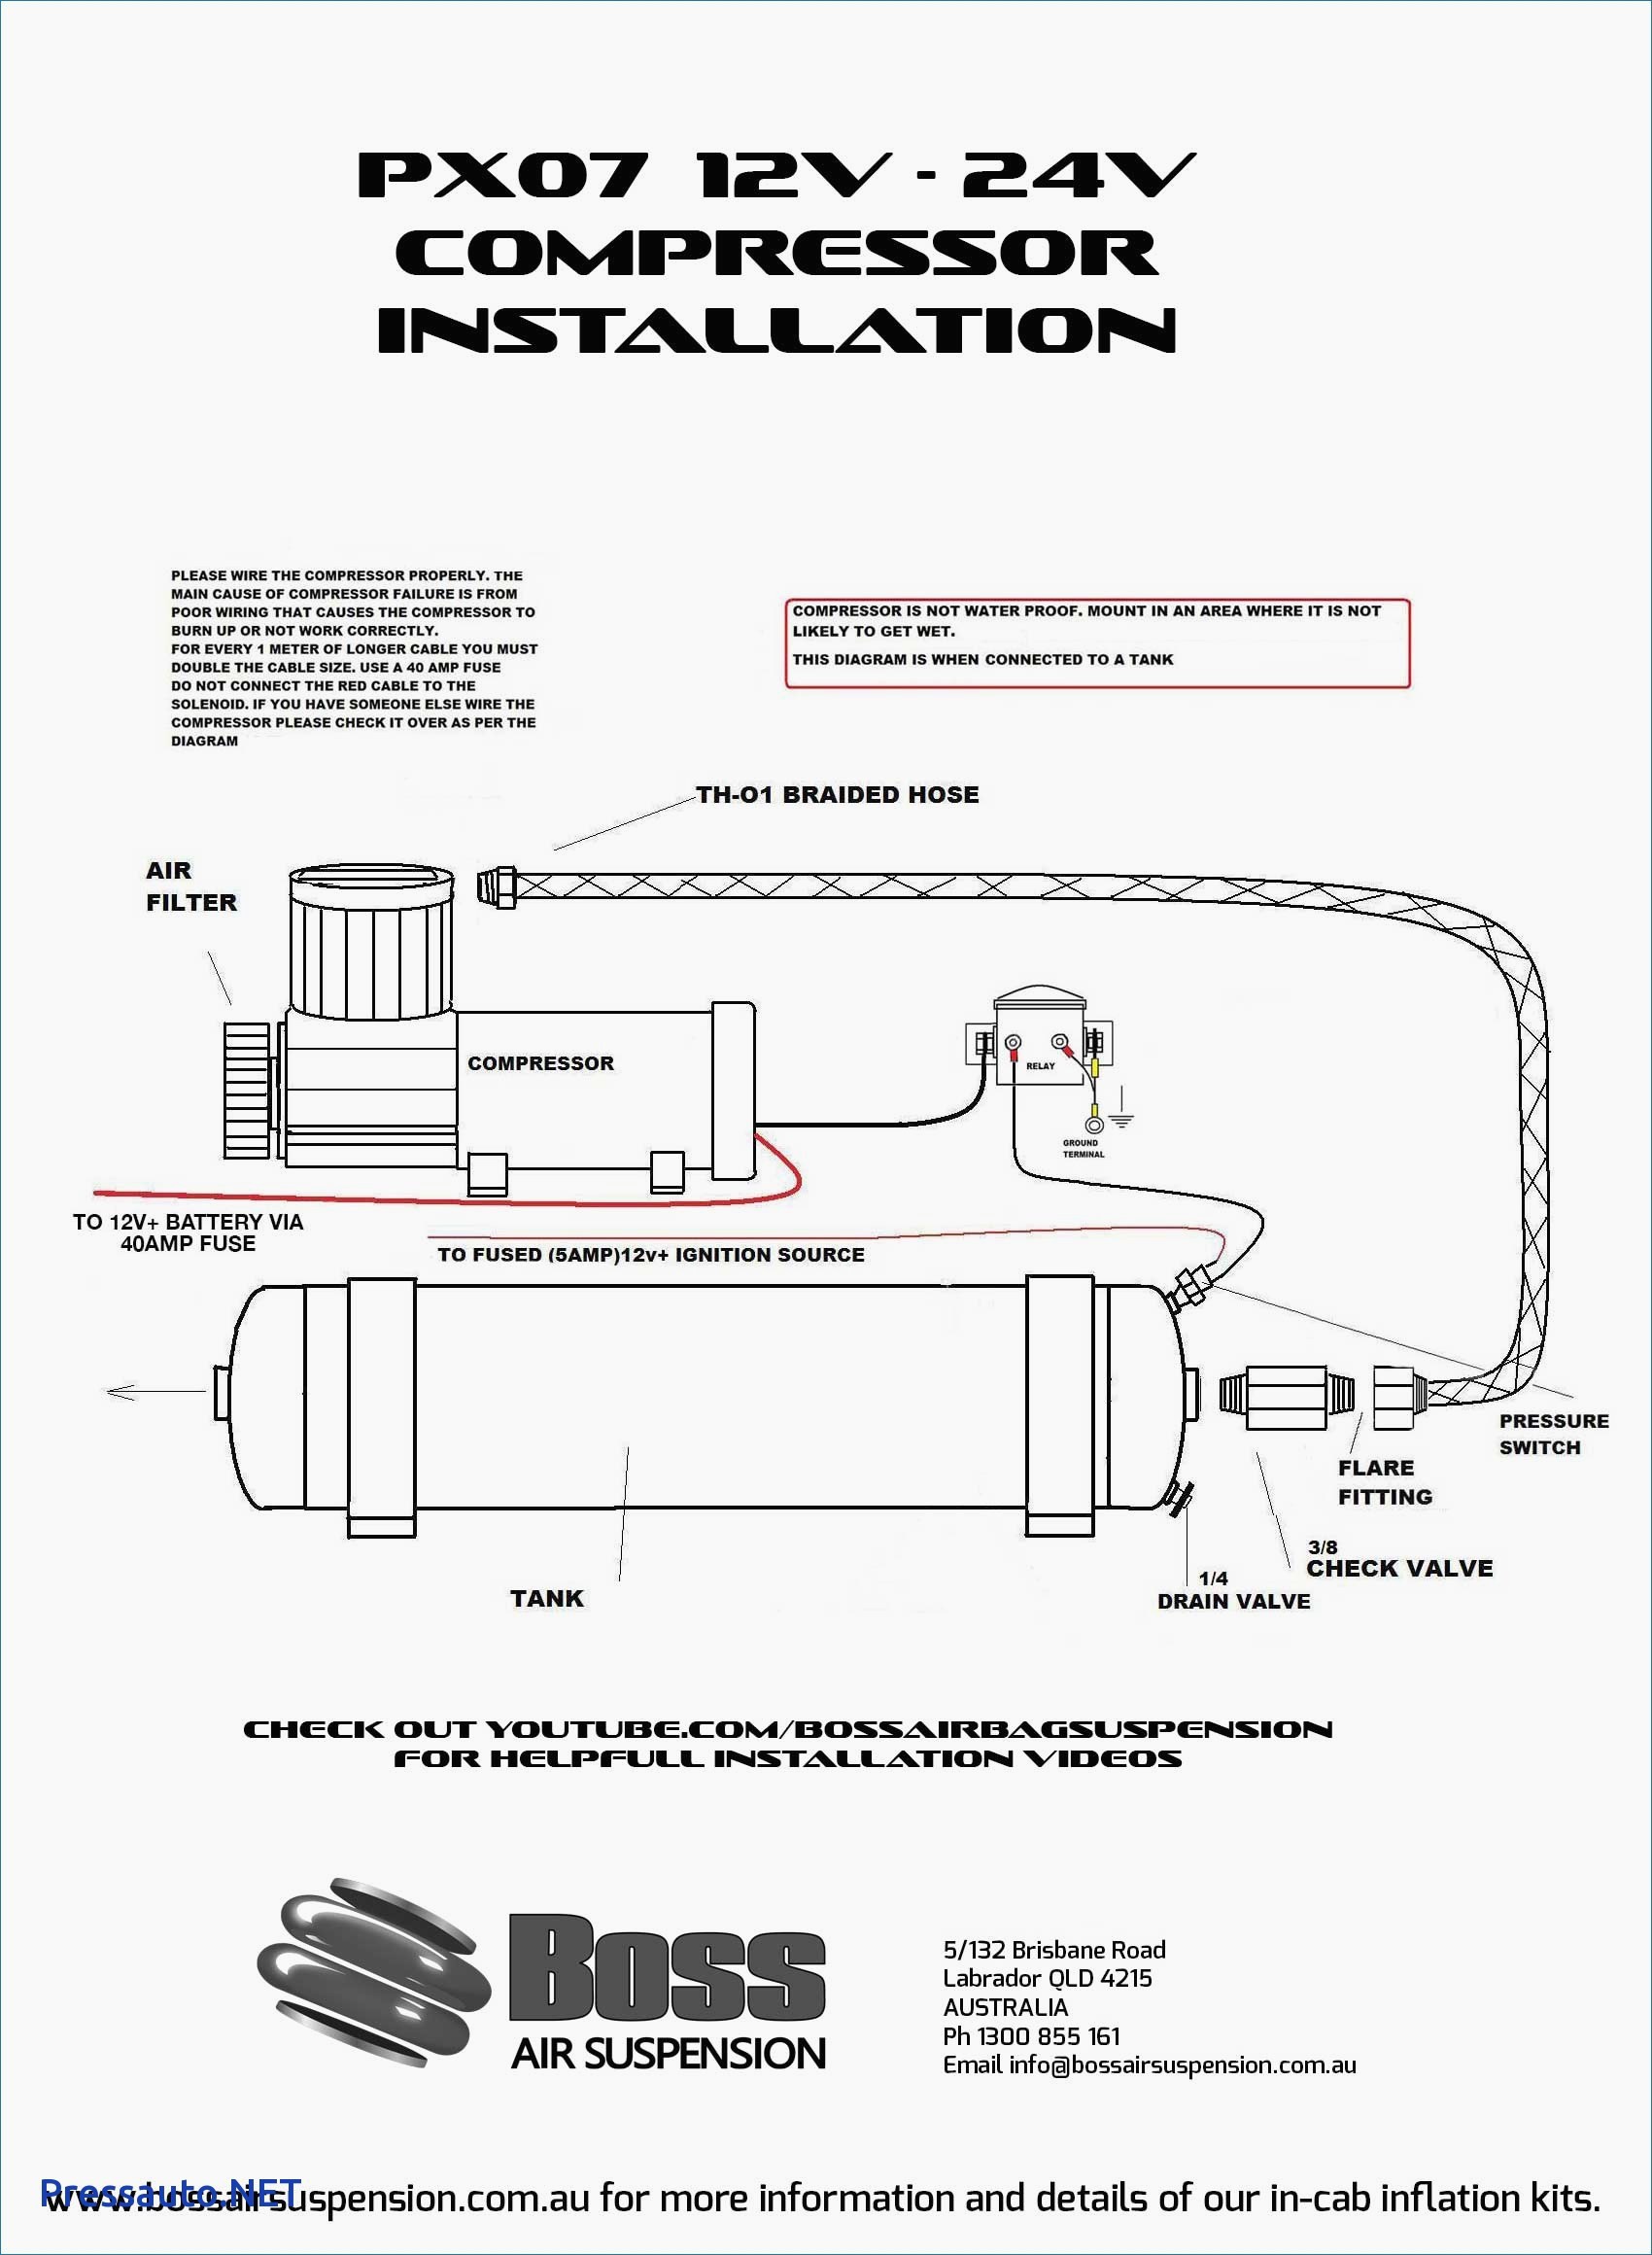 Wiring Diagram for Air pressor Pressure Switch Fresh Square D Air Pressor Pressure Switch Wiring Diagram